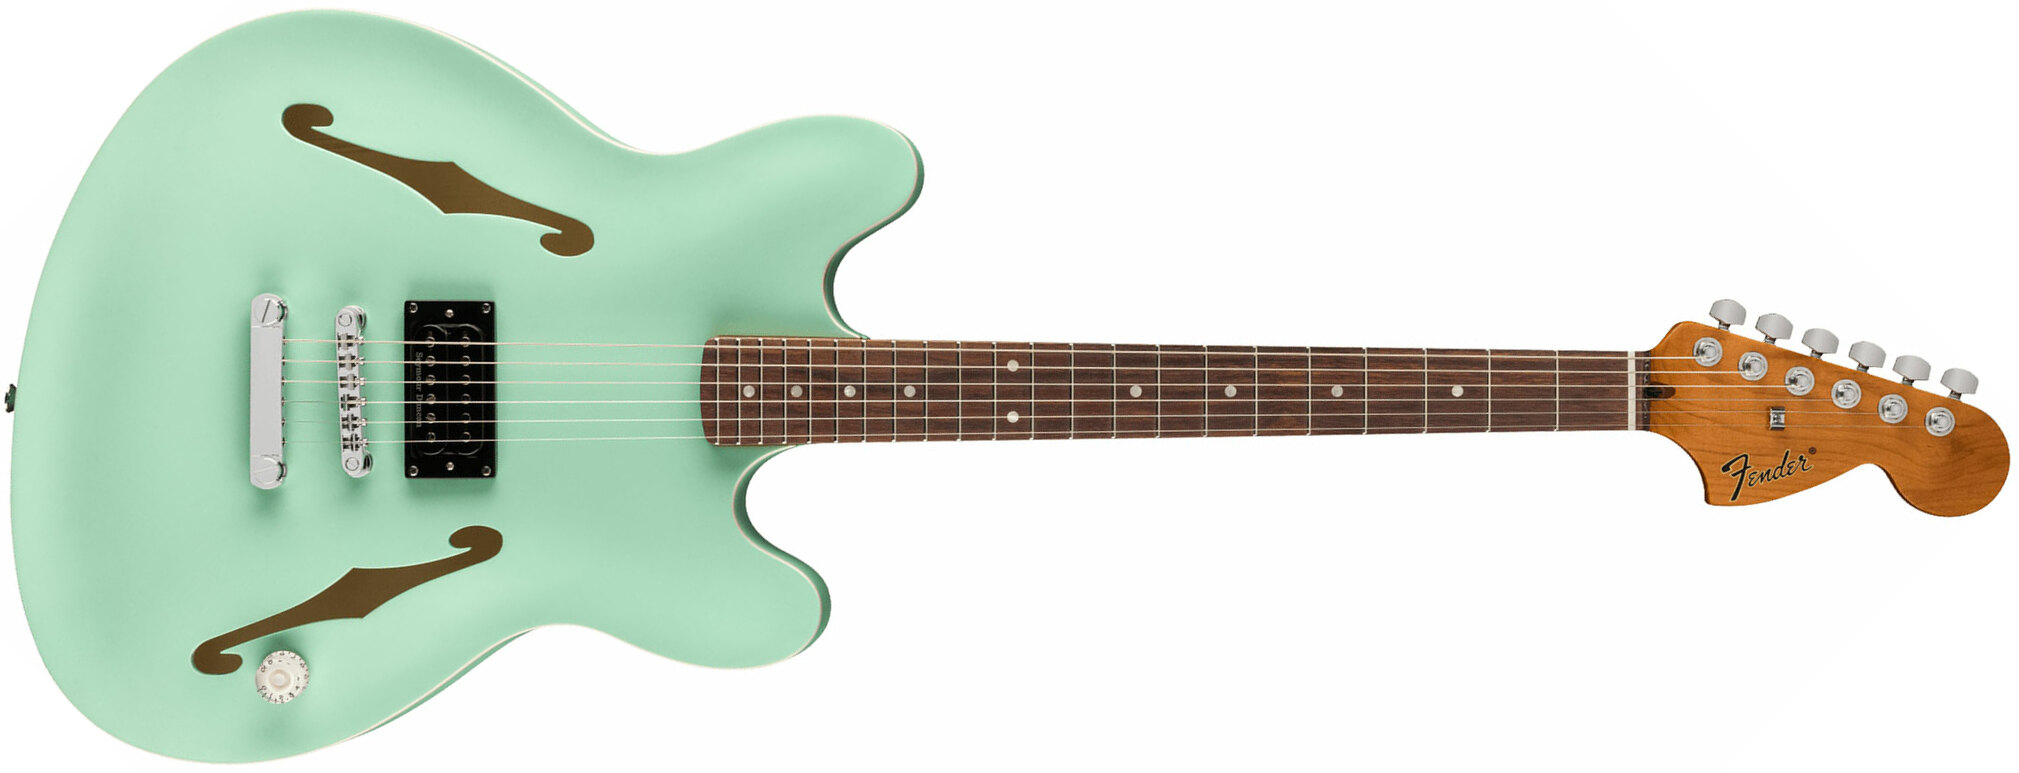 Fender Tom Delonge Starcaster 1h Seymour Duncan Ht Rw - Satin Surf Green - Semi-hollow electric guitar - Main picture